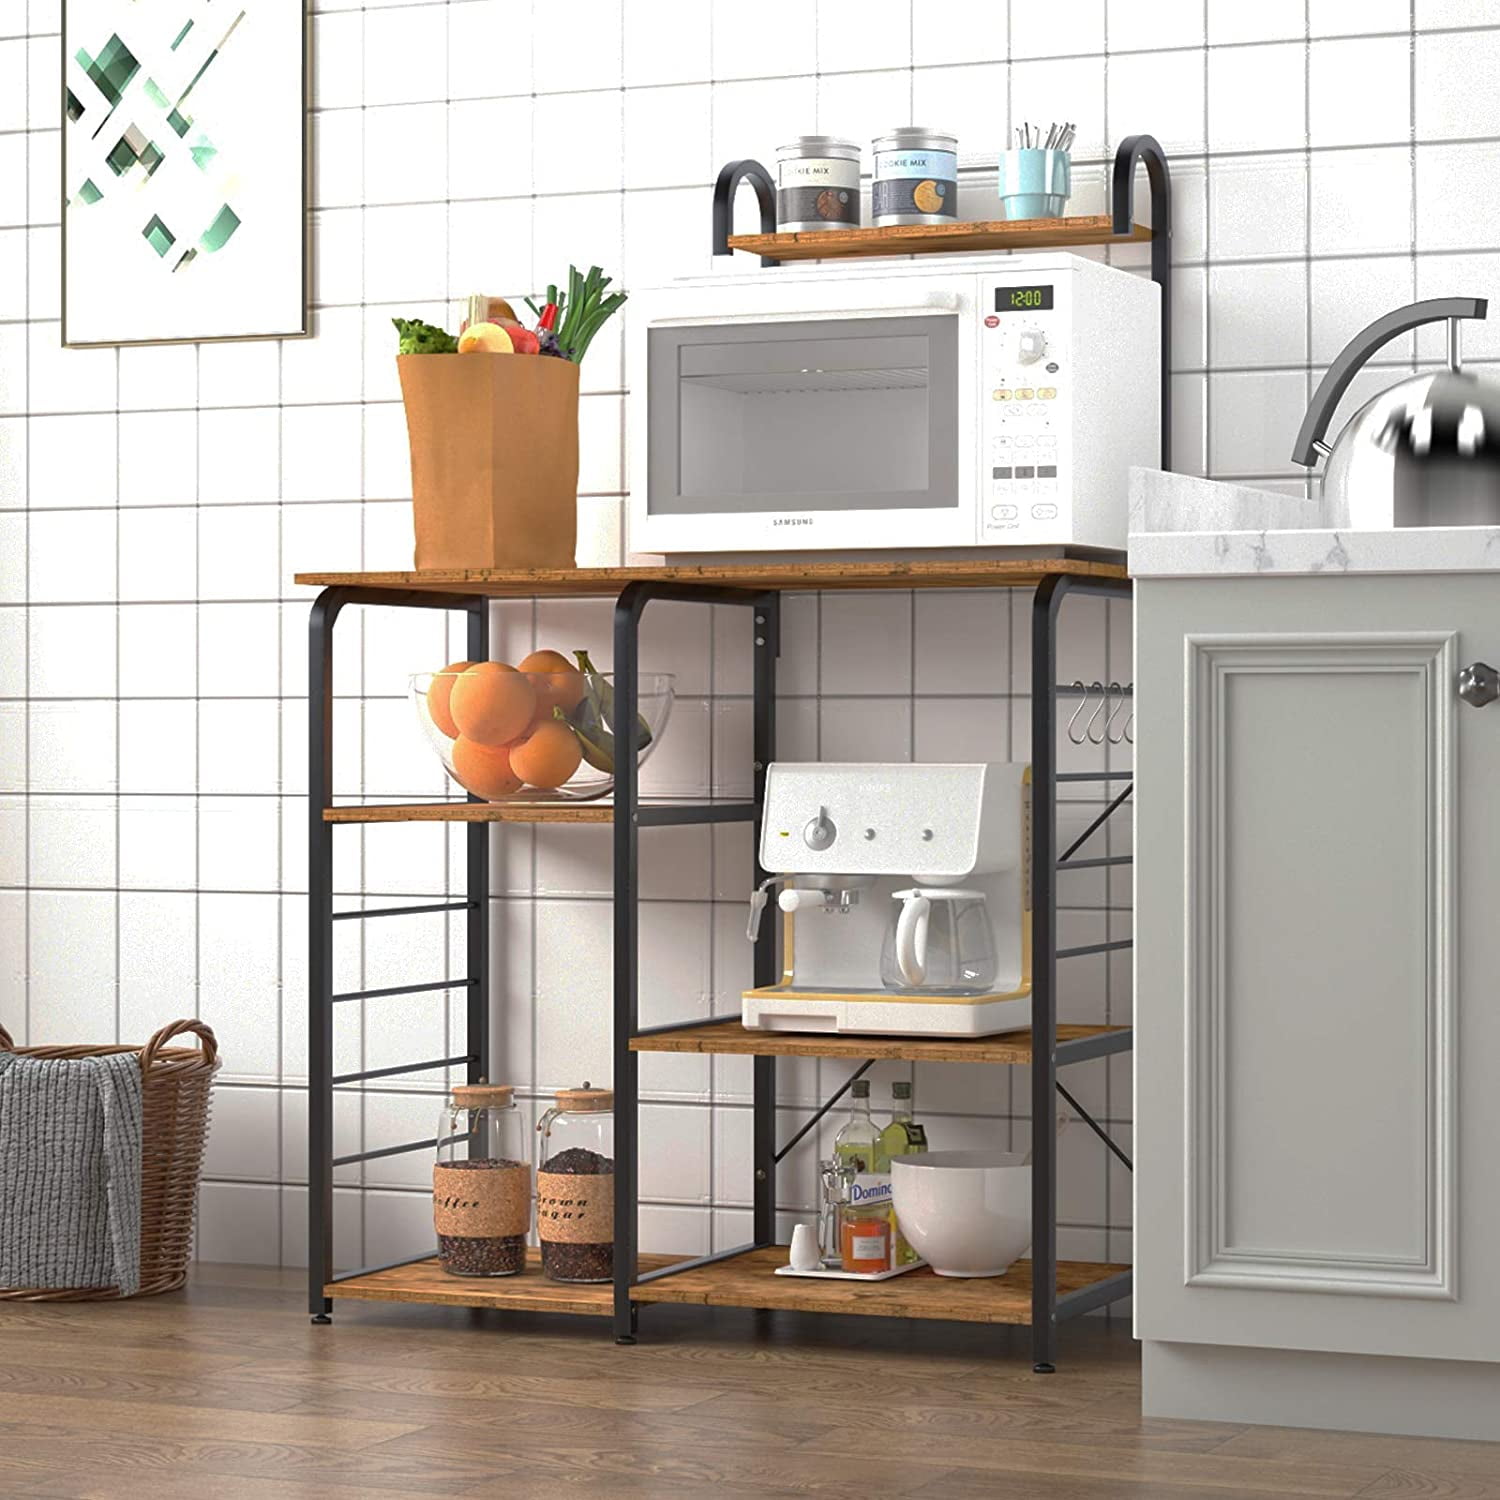 SogesPower Kitchen Stand 4-Tier Storage Shelf with Hooks Microwave 